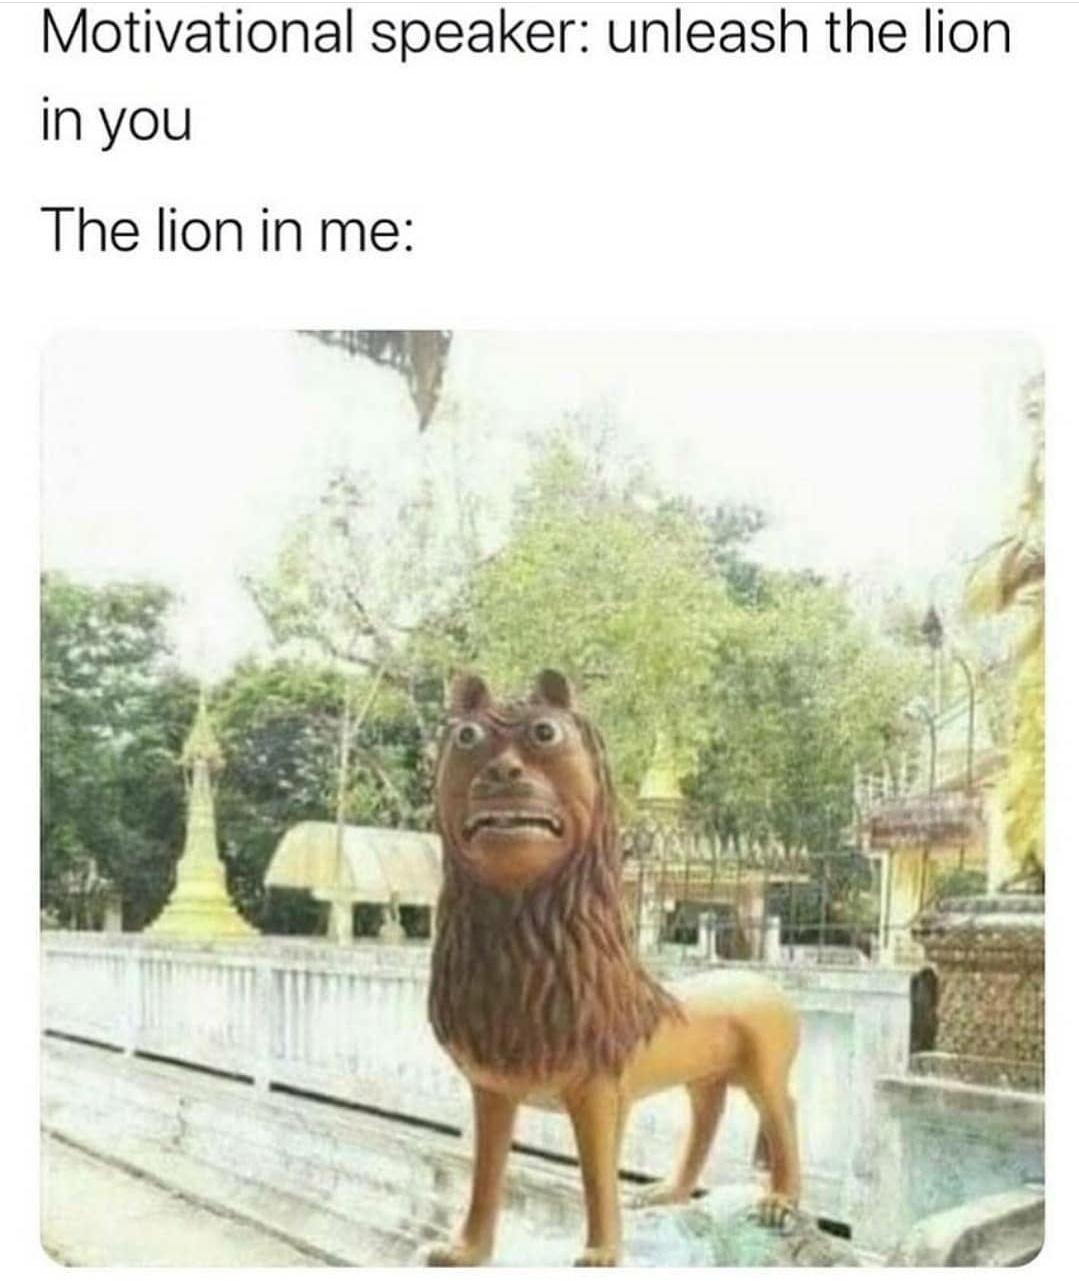 lion memes - Motivational speaker unleash the lion in you The lion in me